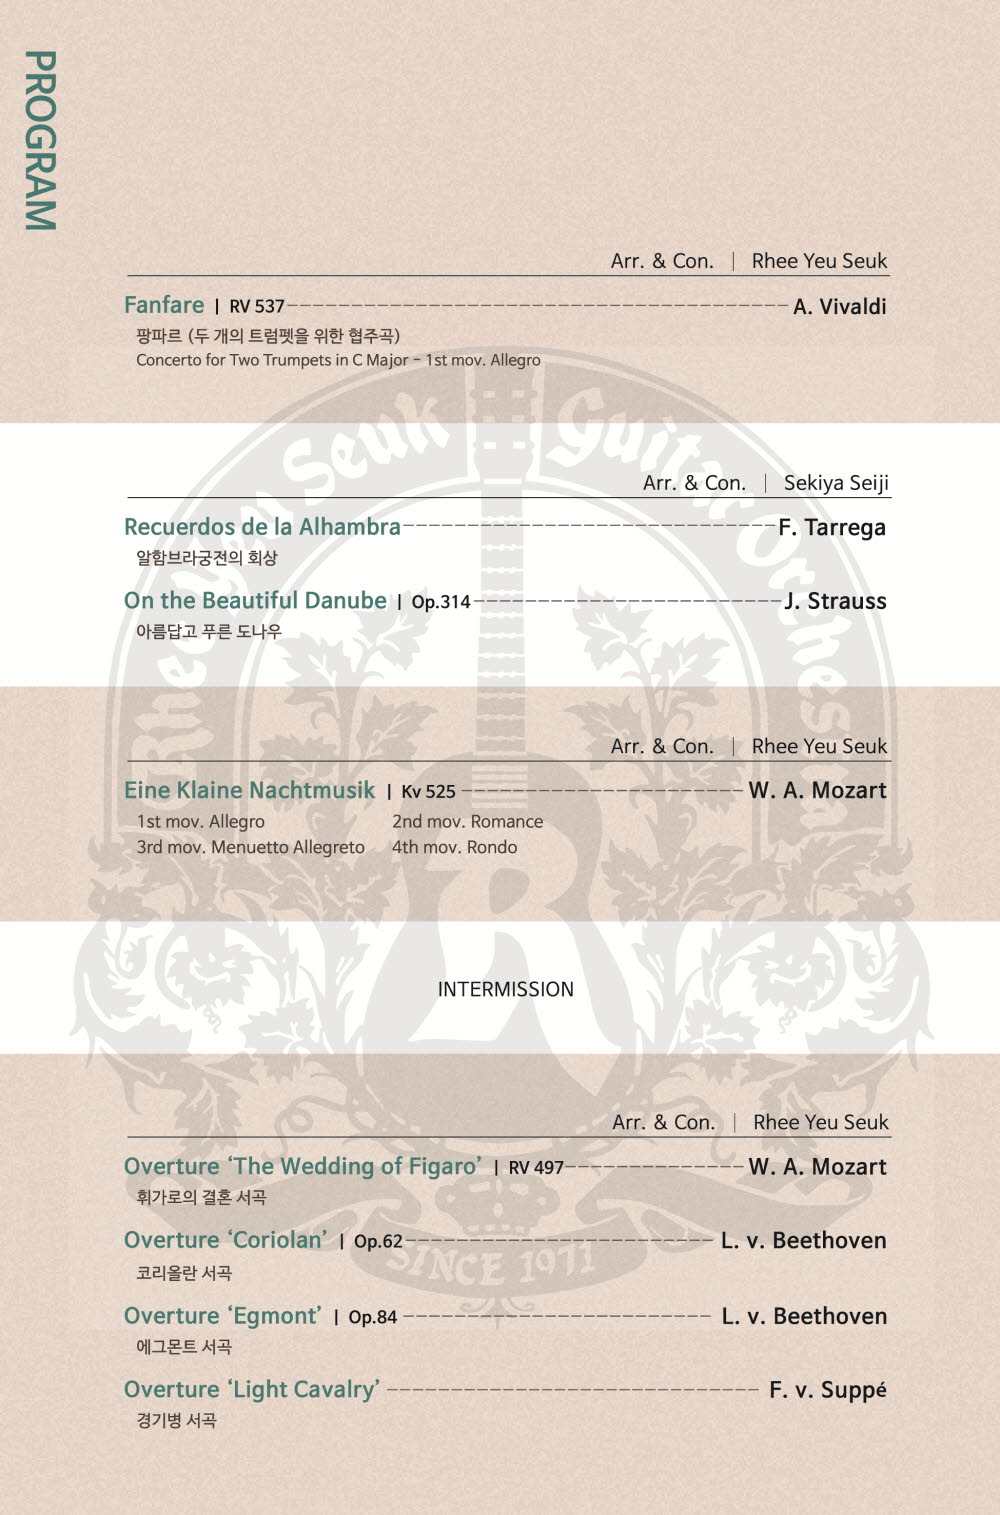 
PROGRAM

Arr.&Con.  Rhee Yeu Seuk
Fanfare RV 537 - A.Vivaldi
팡파르 (두 개의 프럼펫을 위한 협주곡)
Concerto for Two Trumpets in C Major - 1st mov. Allegro

Arr.&Con. Sekiya Seigi
Recuerdos de la Alhambra (알함브라궁전의 회상) - F.Terrega
On the Beautiful Danube (아름답고 푸른 도나우) op.314 - J.Strauss

Arr.&Con. Rhee Yeu Seuk
Eine Klaine Nachtmusik Kv 525 - W.A.Mozart
1st mov.Allegro 2nd mov.Romance 3rd mov.Menuetto Allegreto 4th mov.Rondo

INTERMISSION

Arr.& Con. Rhee Yeu Seuk
Overture'The Wedding of Figaro'(휘가로의 결혼 서곡) RB 497 - W.A.Mozart
Overture'Coriola'(코리올란 서곡) Op.62 - L.v.Beethoven
Overture'Egmont'(에그몬트 서곡) Op.84 - L.v.Beethoven
Overture'Light Cavalry' (경기병 서곡)- F.v.Suppe